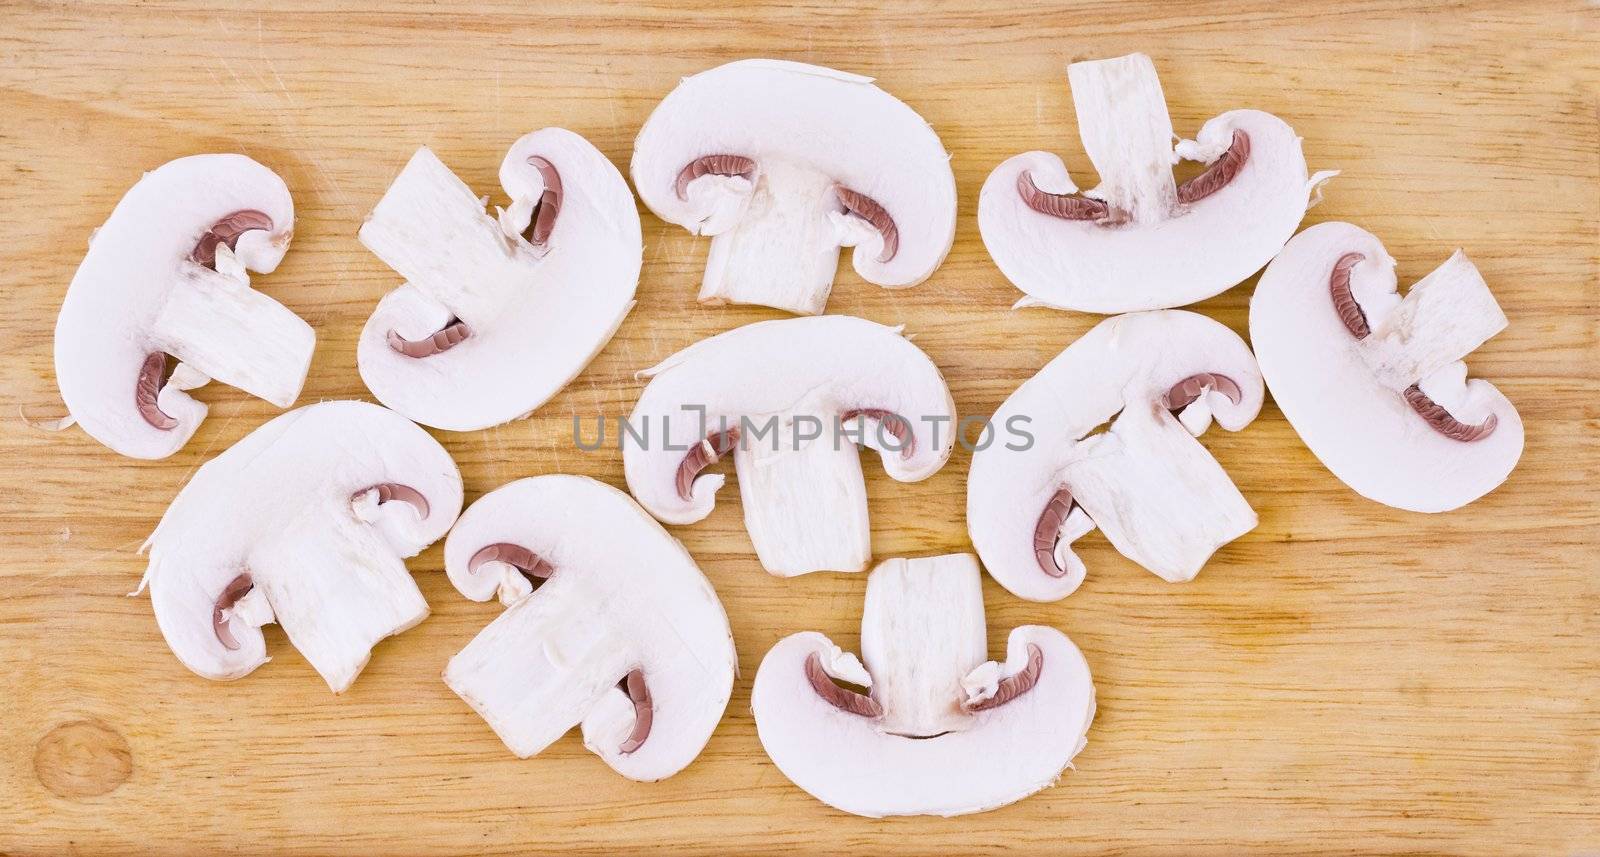 Sliced mushrooms by Gbuglok